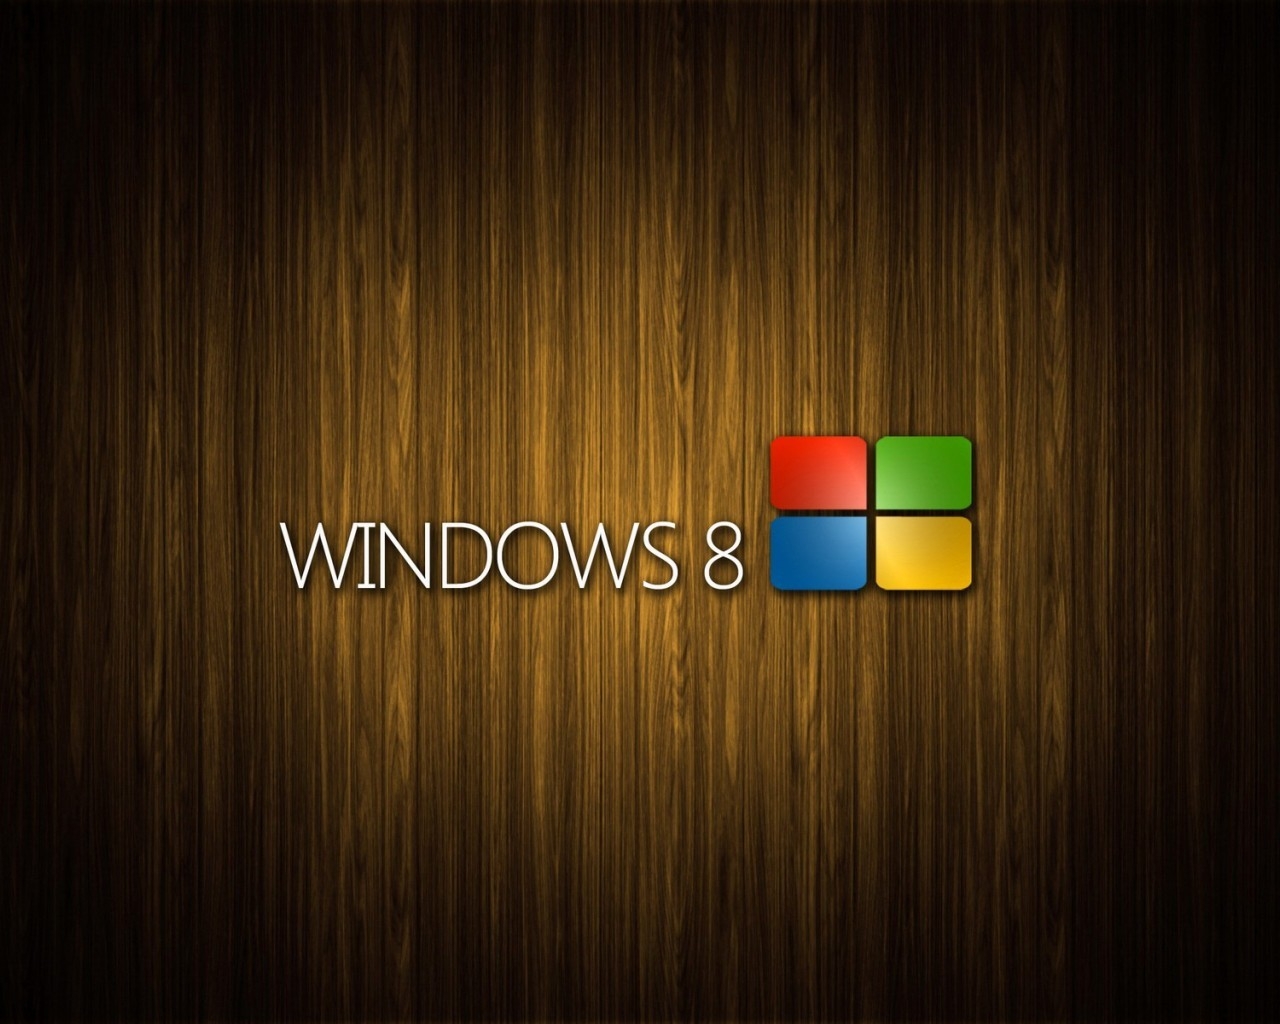 Microsoft Windows 8 Logo for 1280 x 1024 resolution